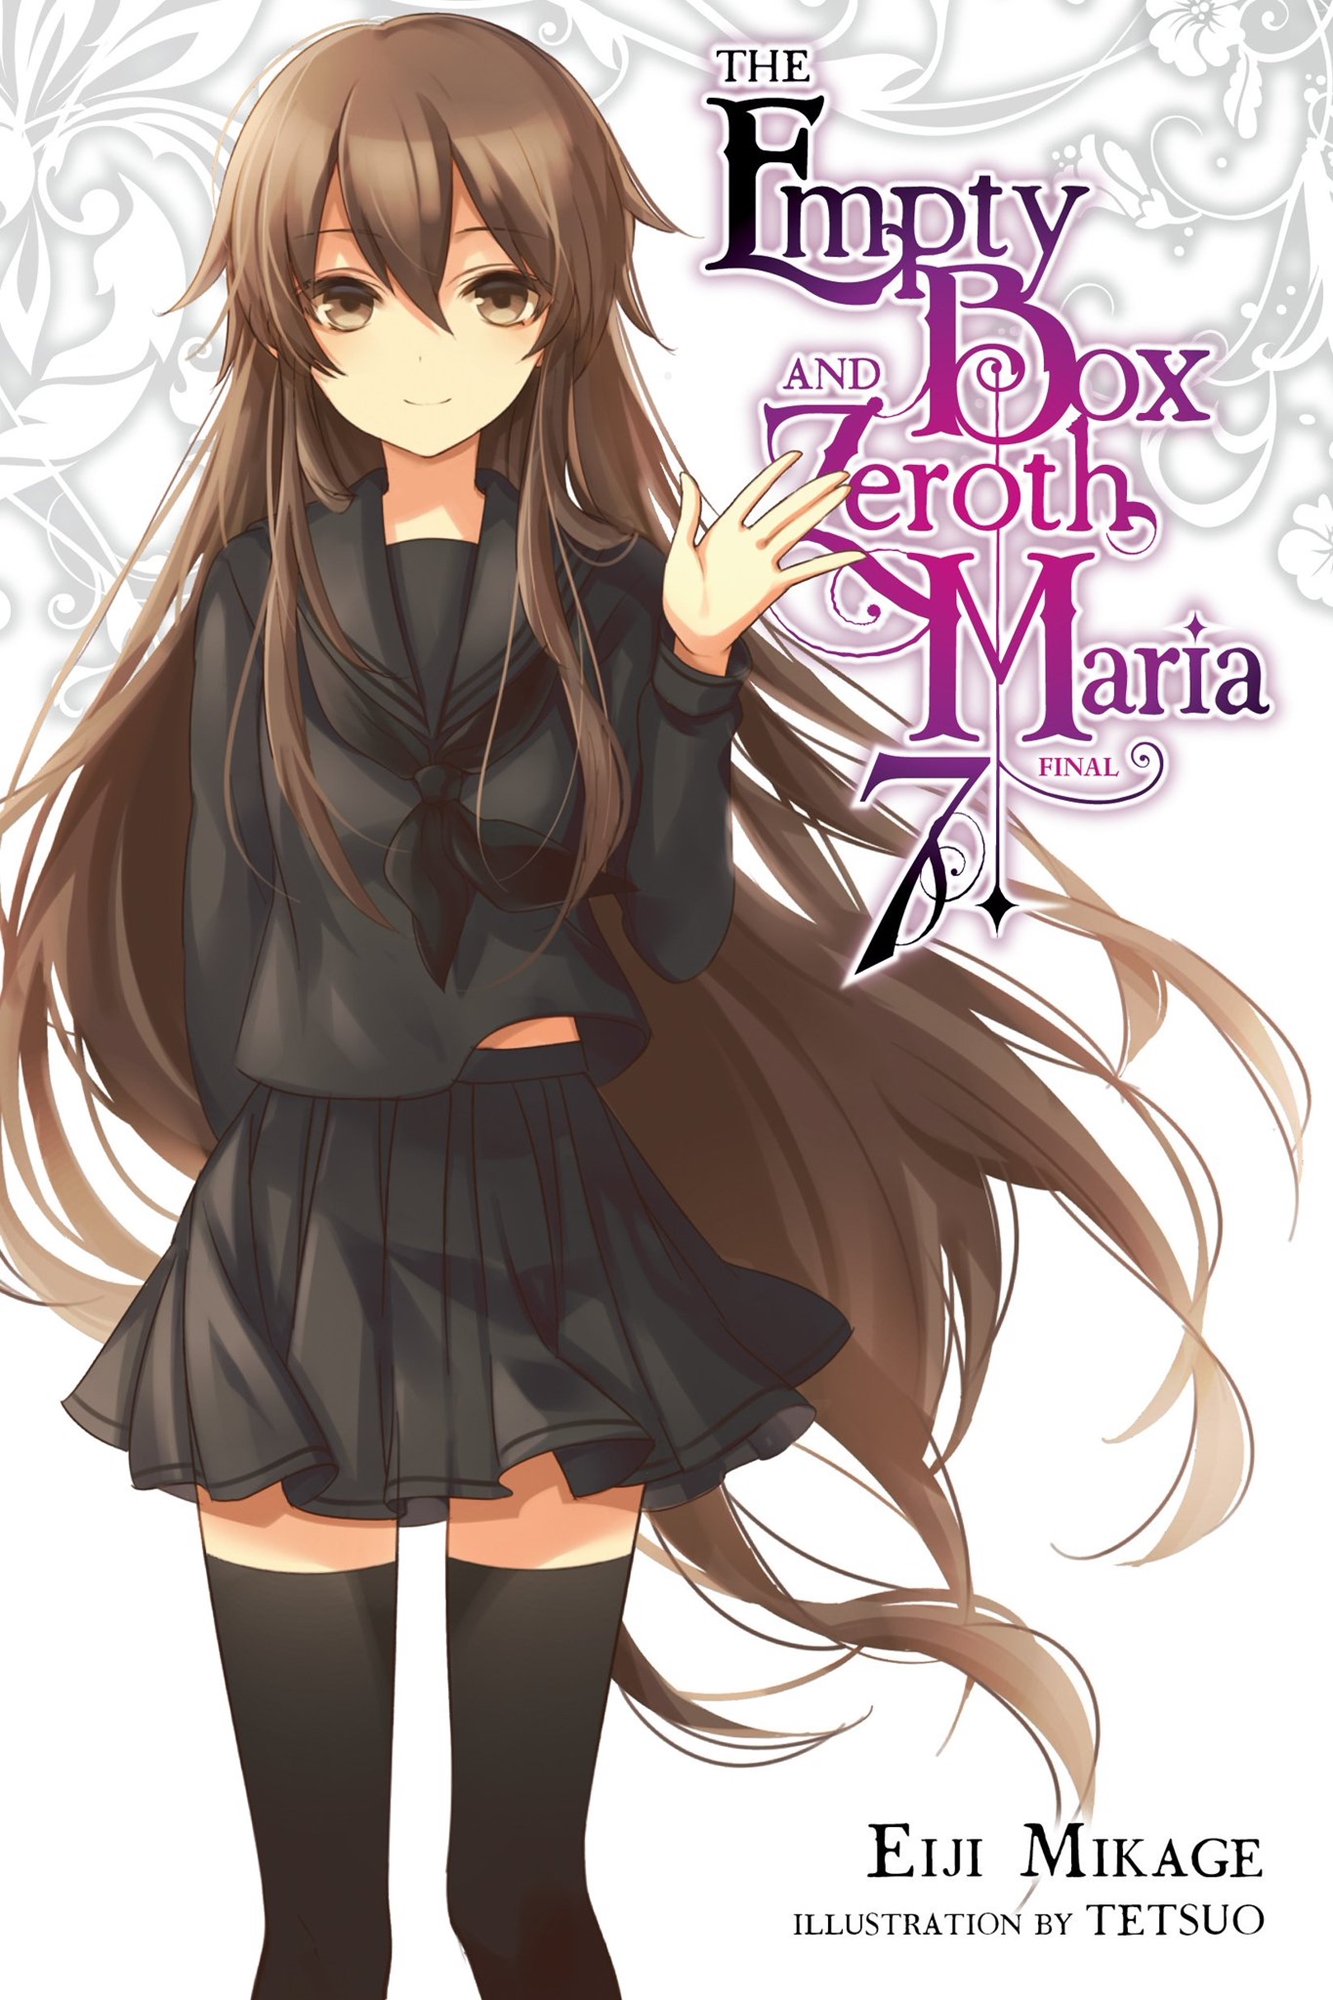 The Empty Box and Zeroth Maria - Volume 7